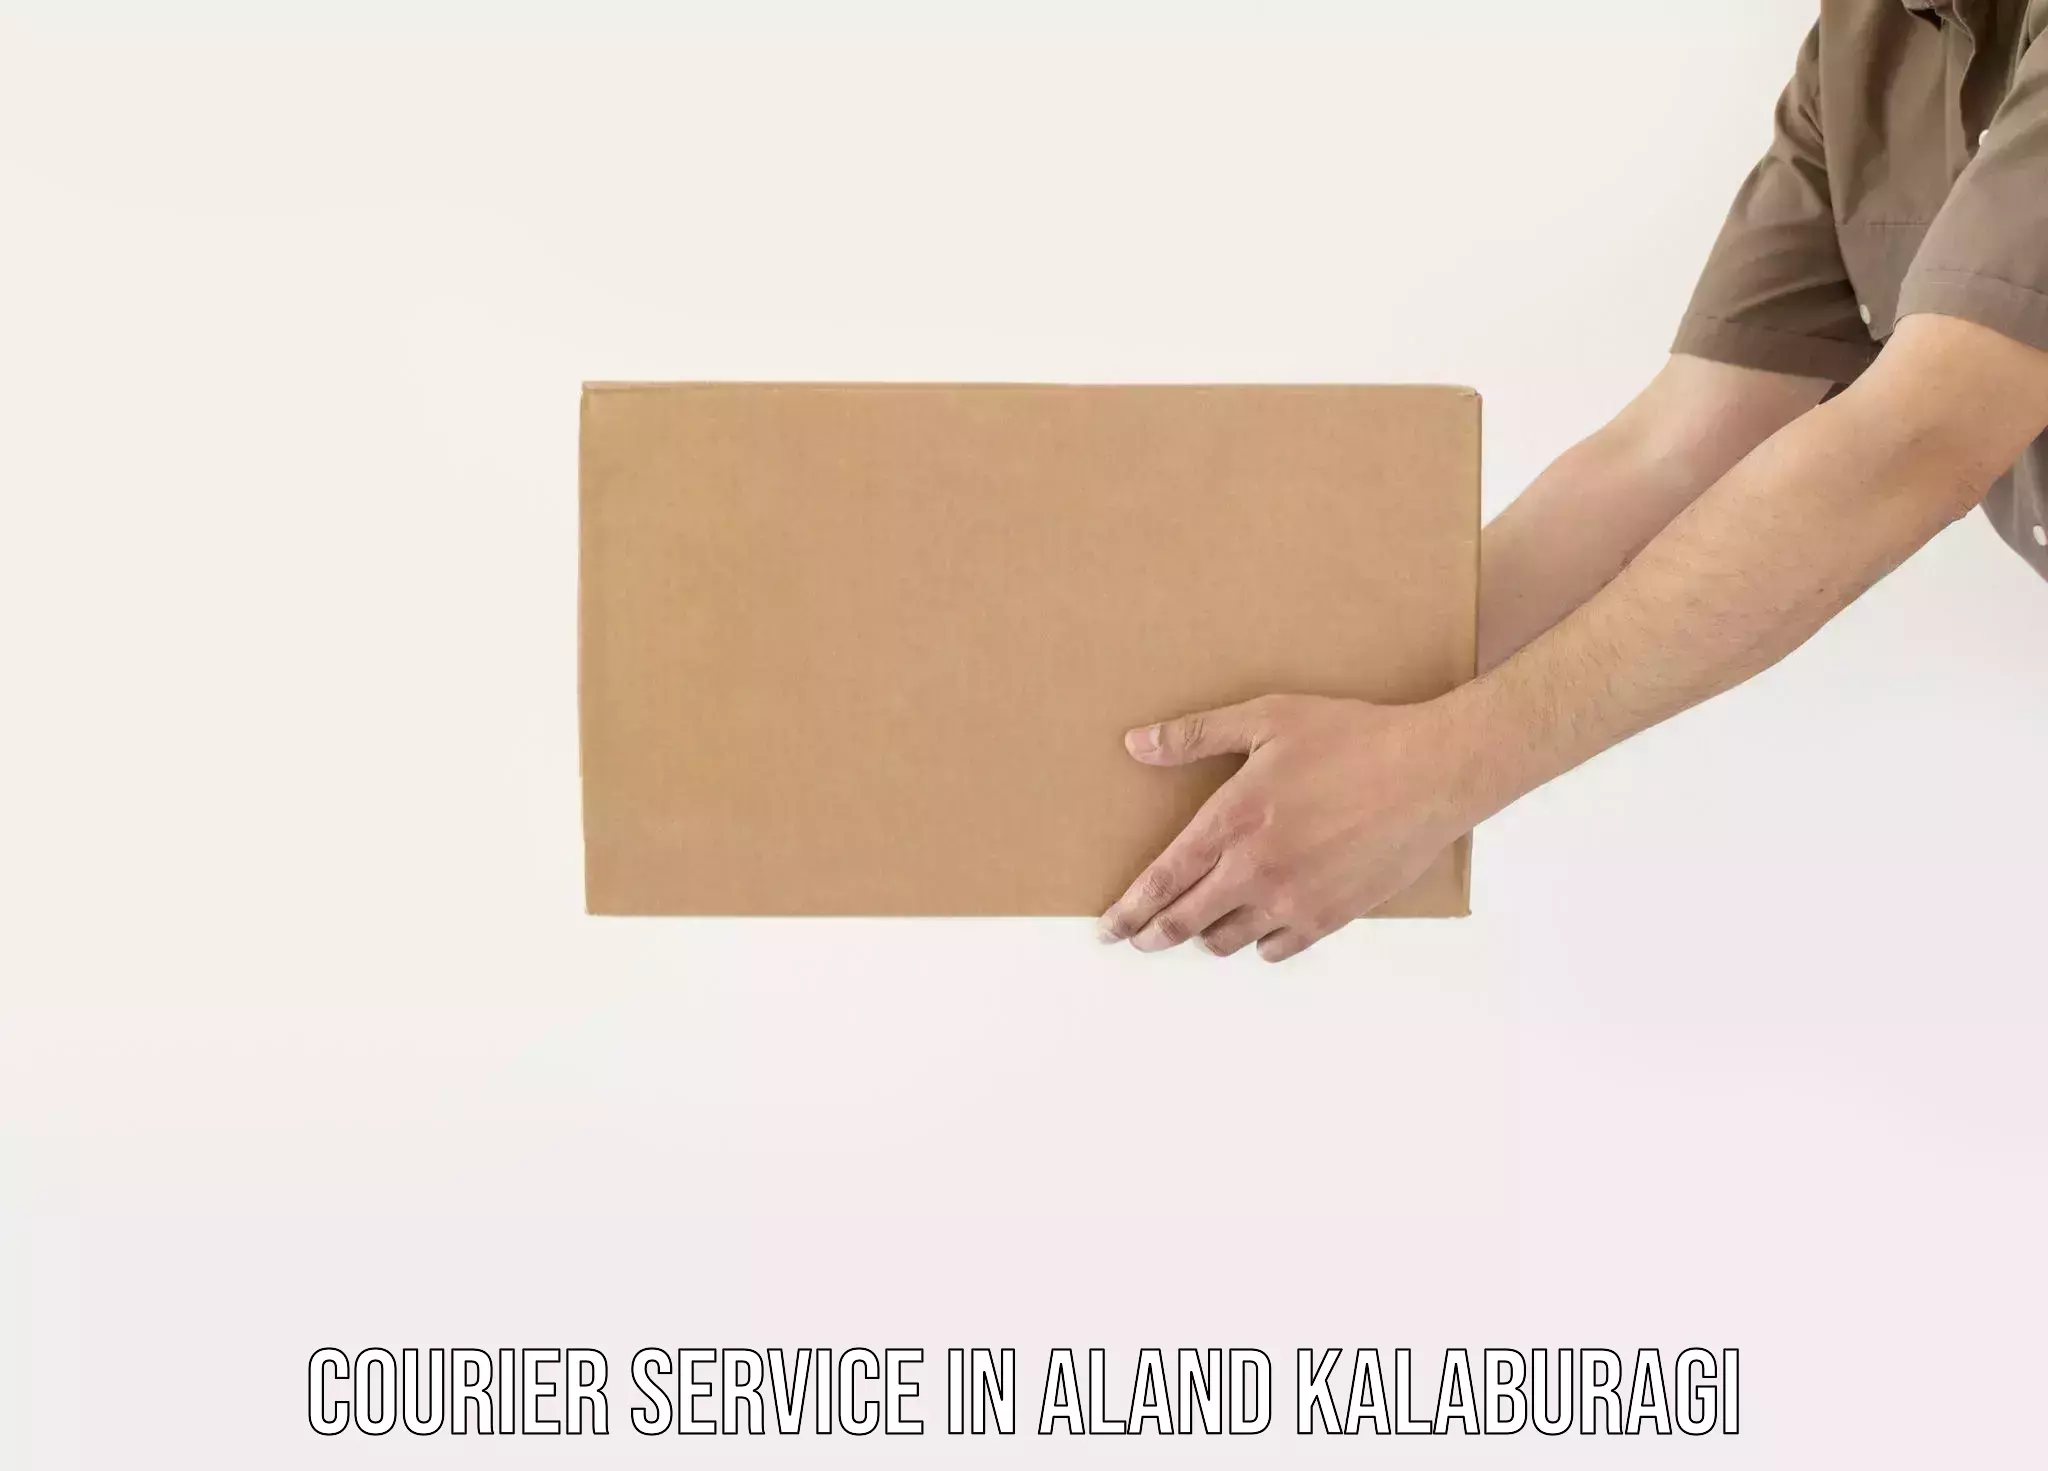 Professional parcel services in Aland Kalaburagi